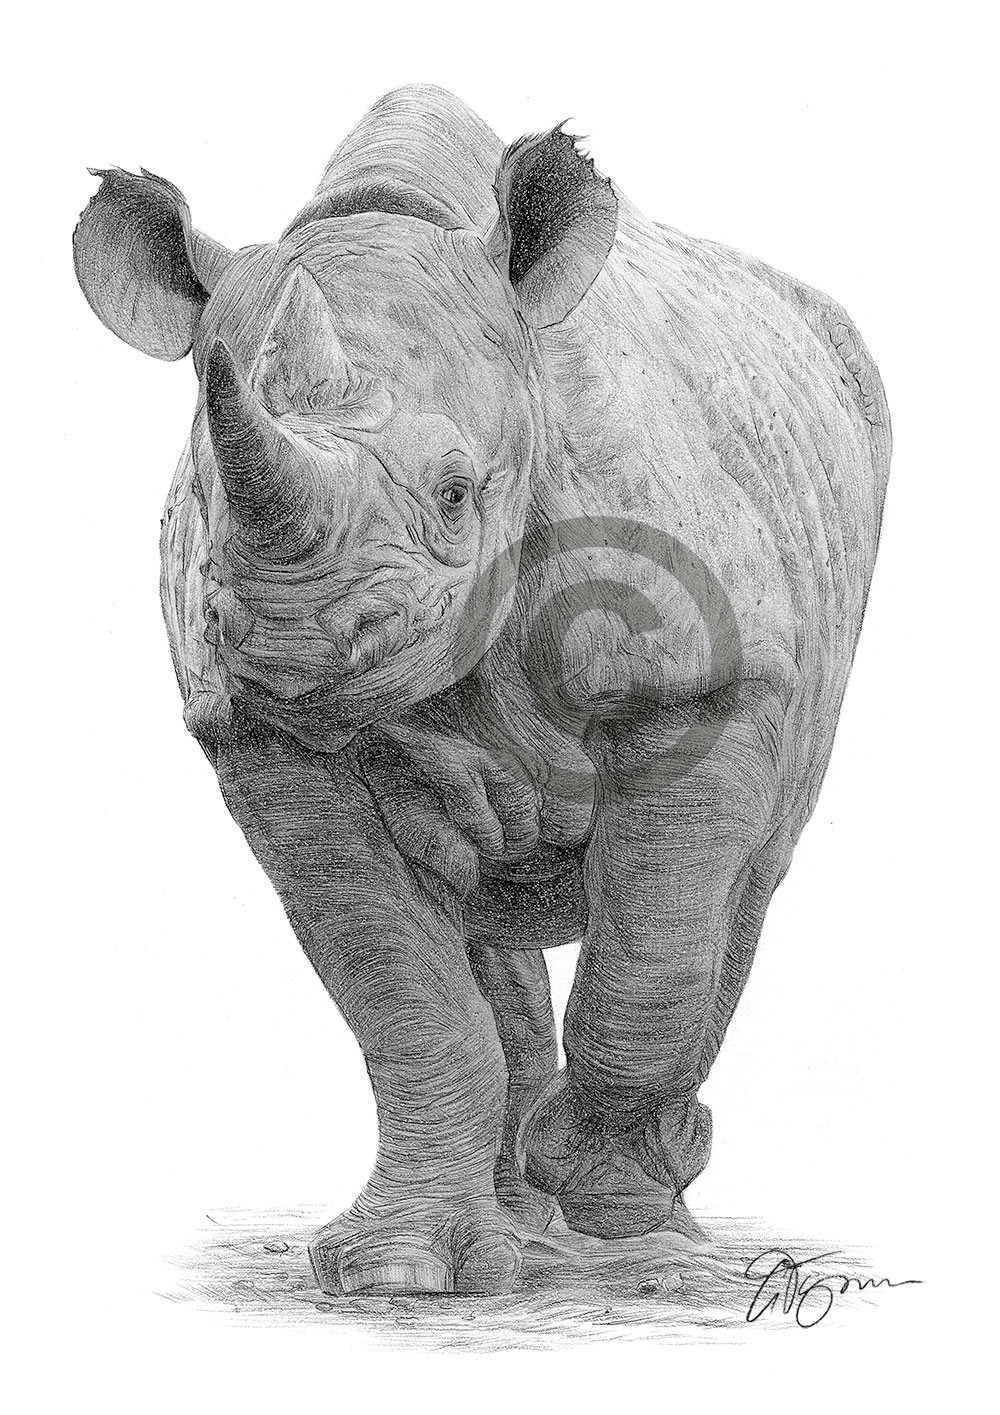 Pencil drawing of a rhino by artist Gary Tymon